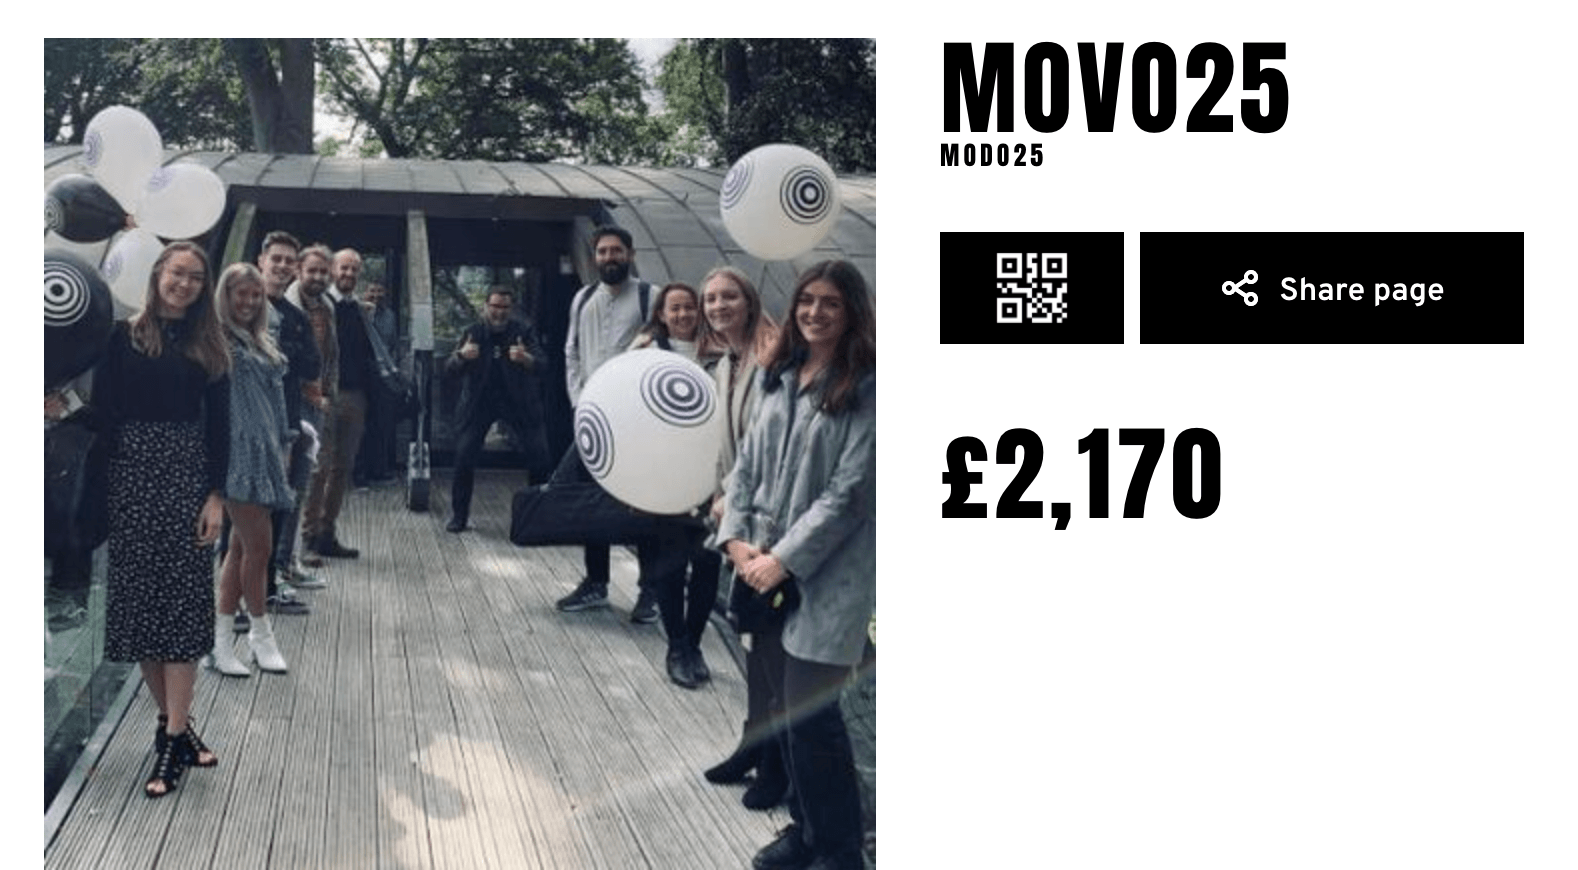 Modo25 completes movember fundraising